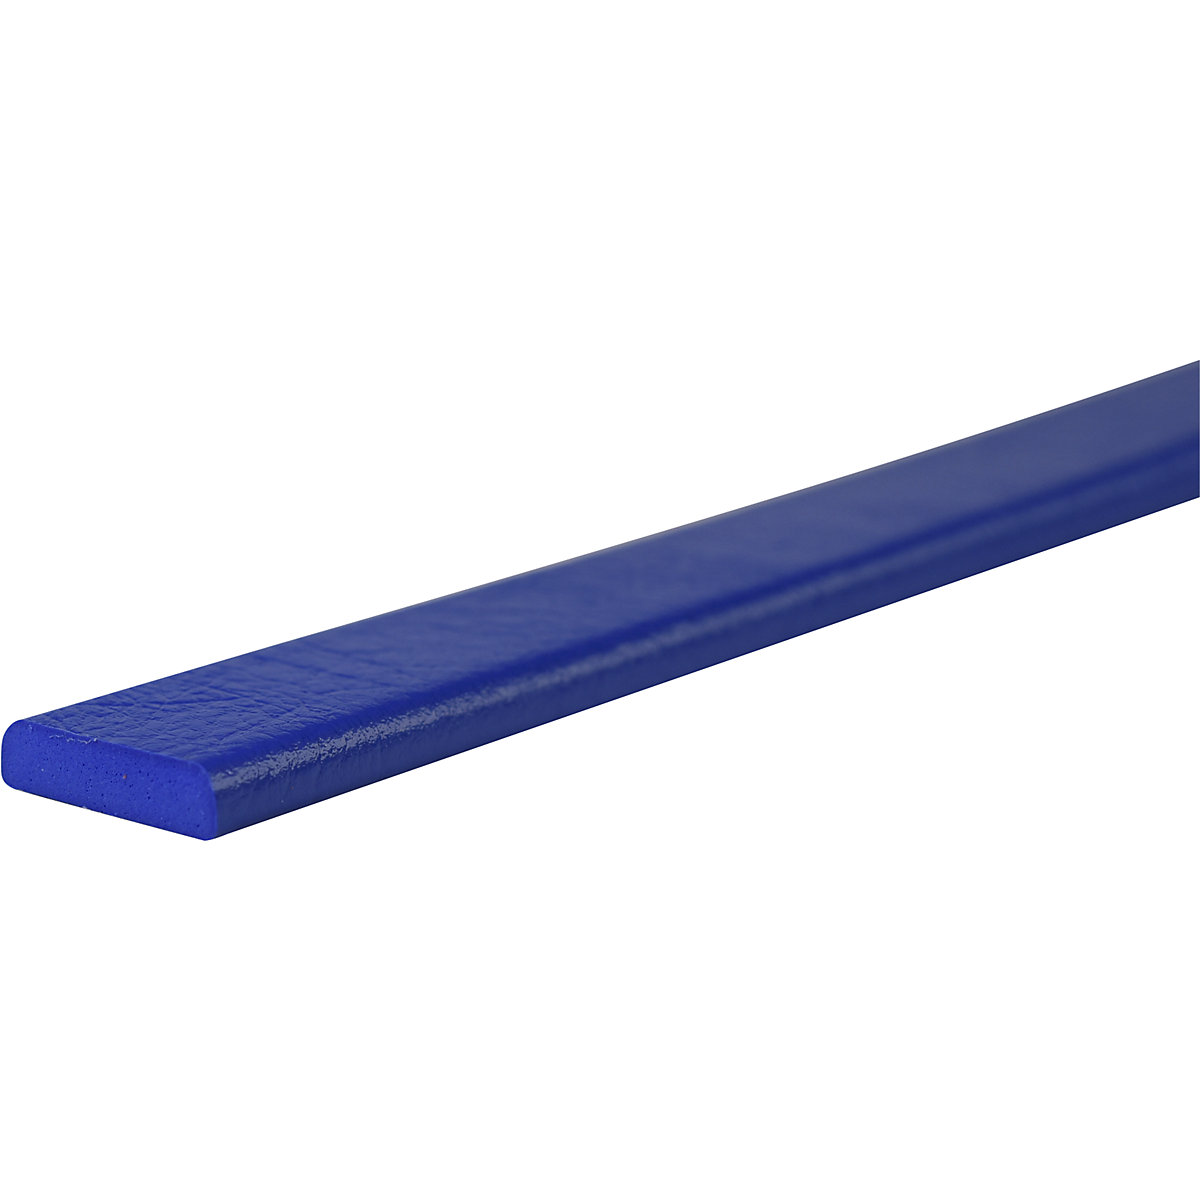 Knuffi®-oppervlaktebescherming – SHG, type F, stuk van 1 m, blauw-27